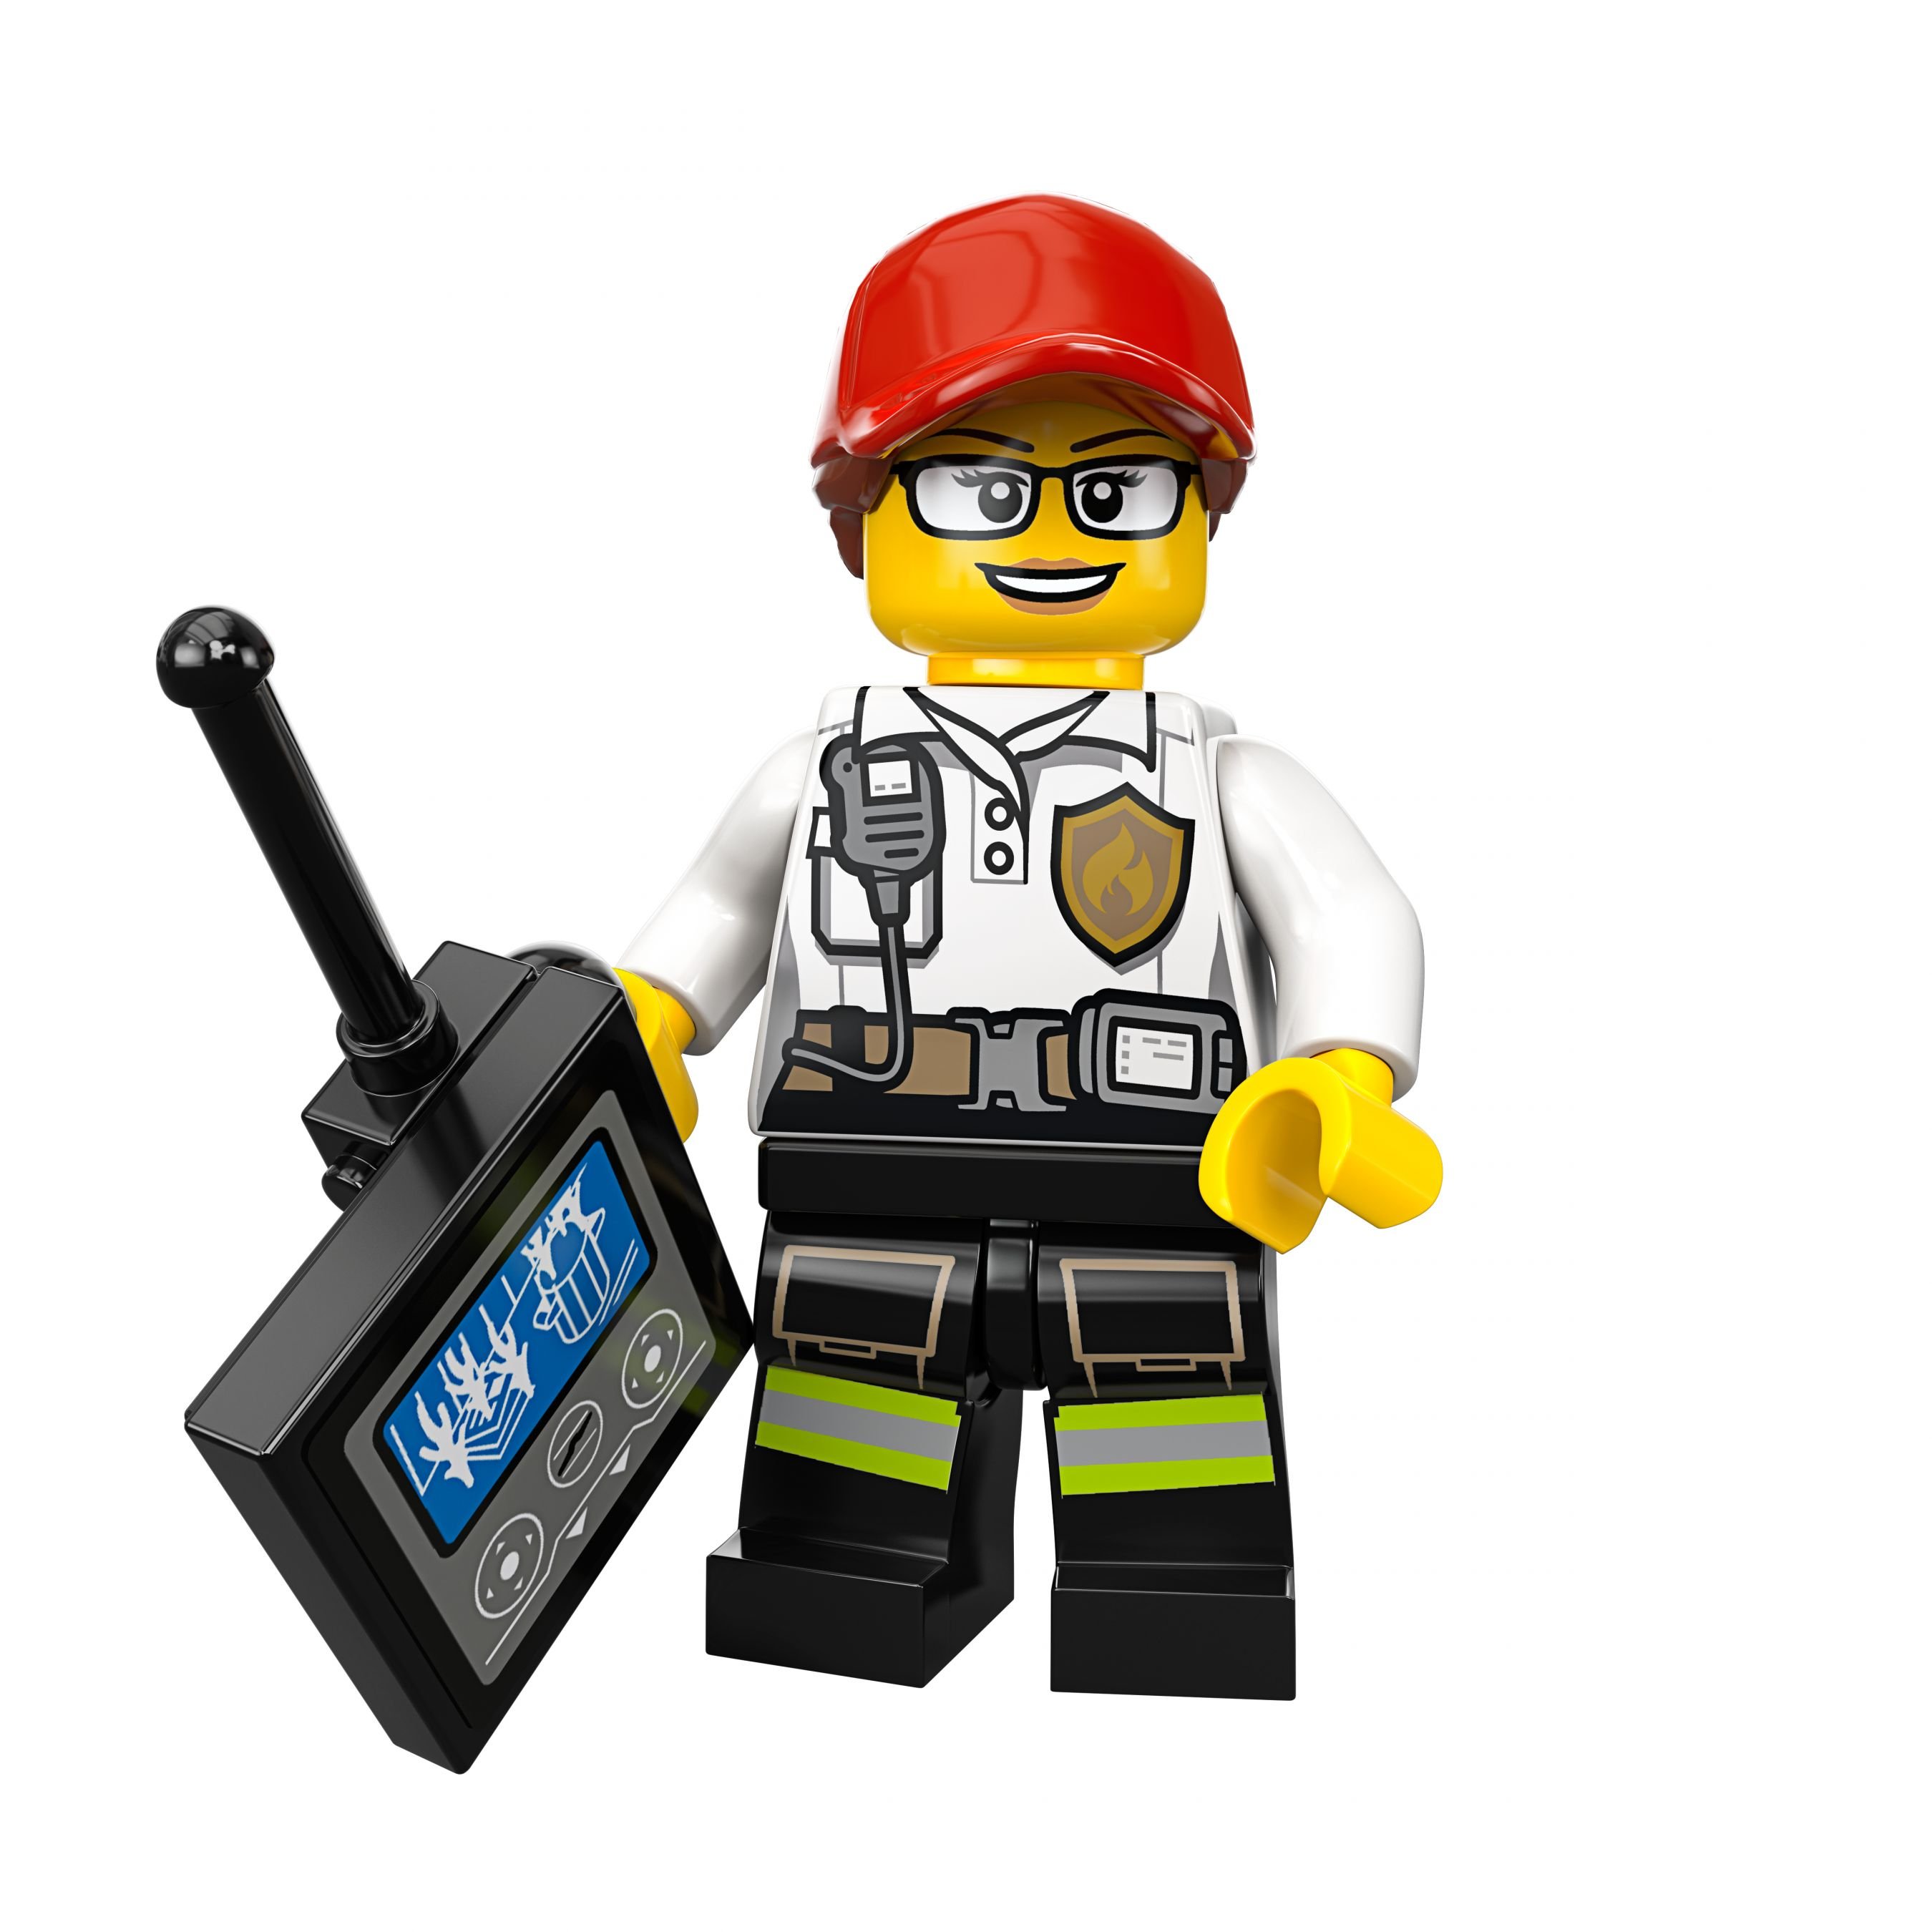 LEGO City 60215 Feuerwehrstation LEGO_60215_alt9.jpg